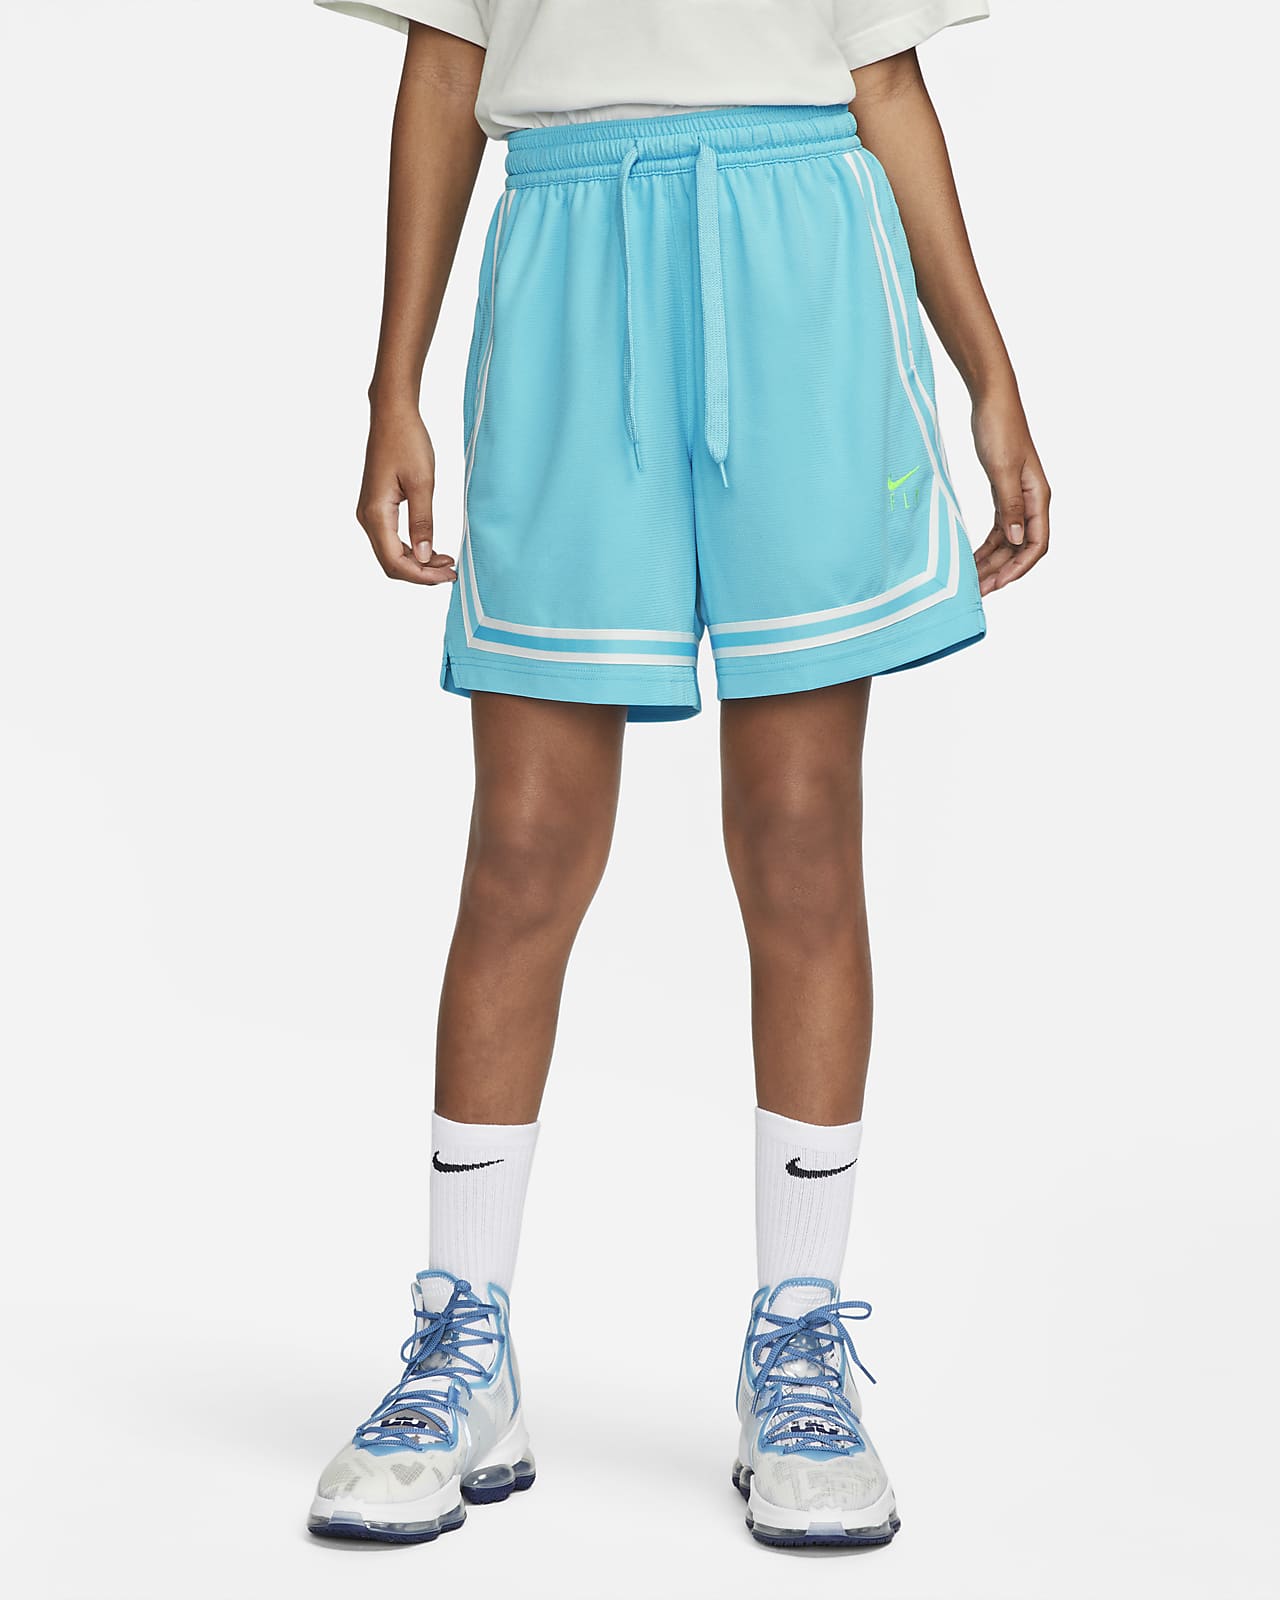 Shorts de básquetbol mujer Nike Fly Crossover. Nike.com